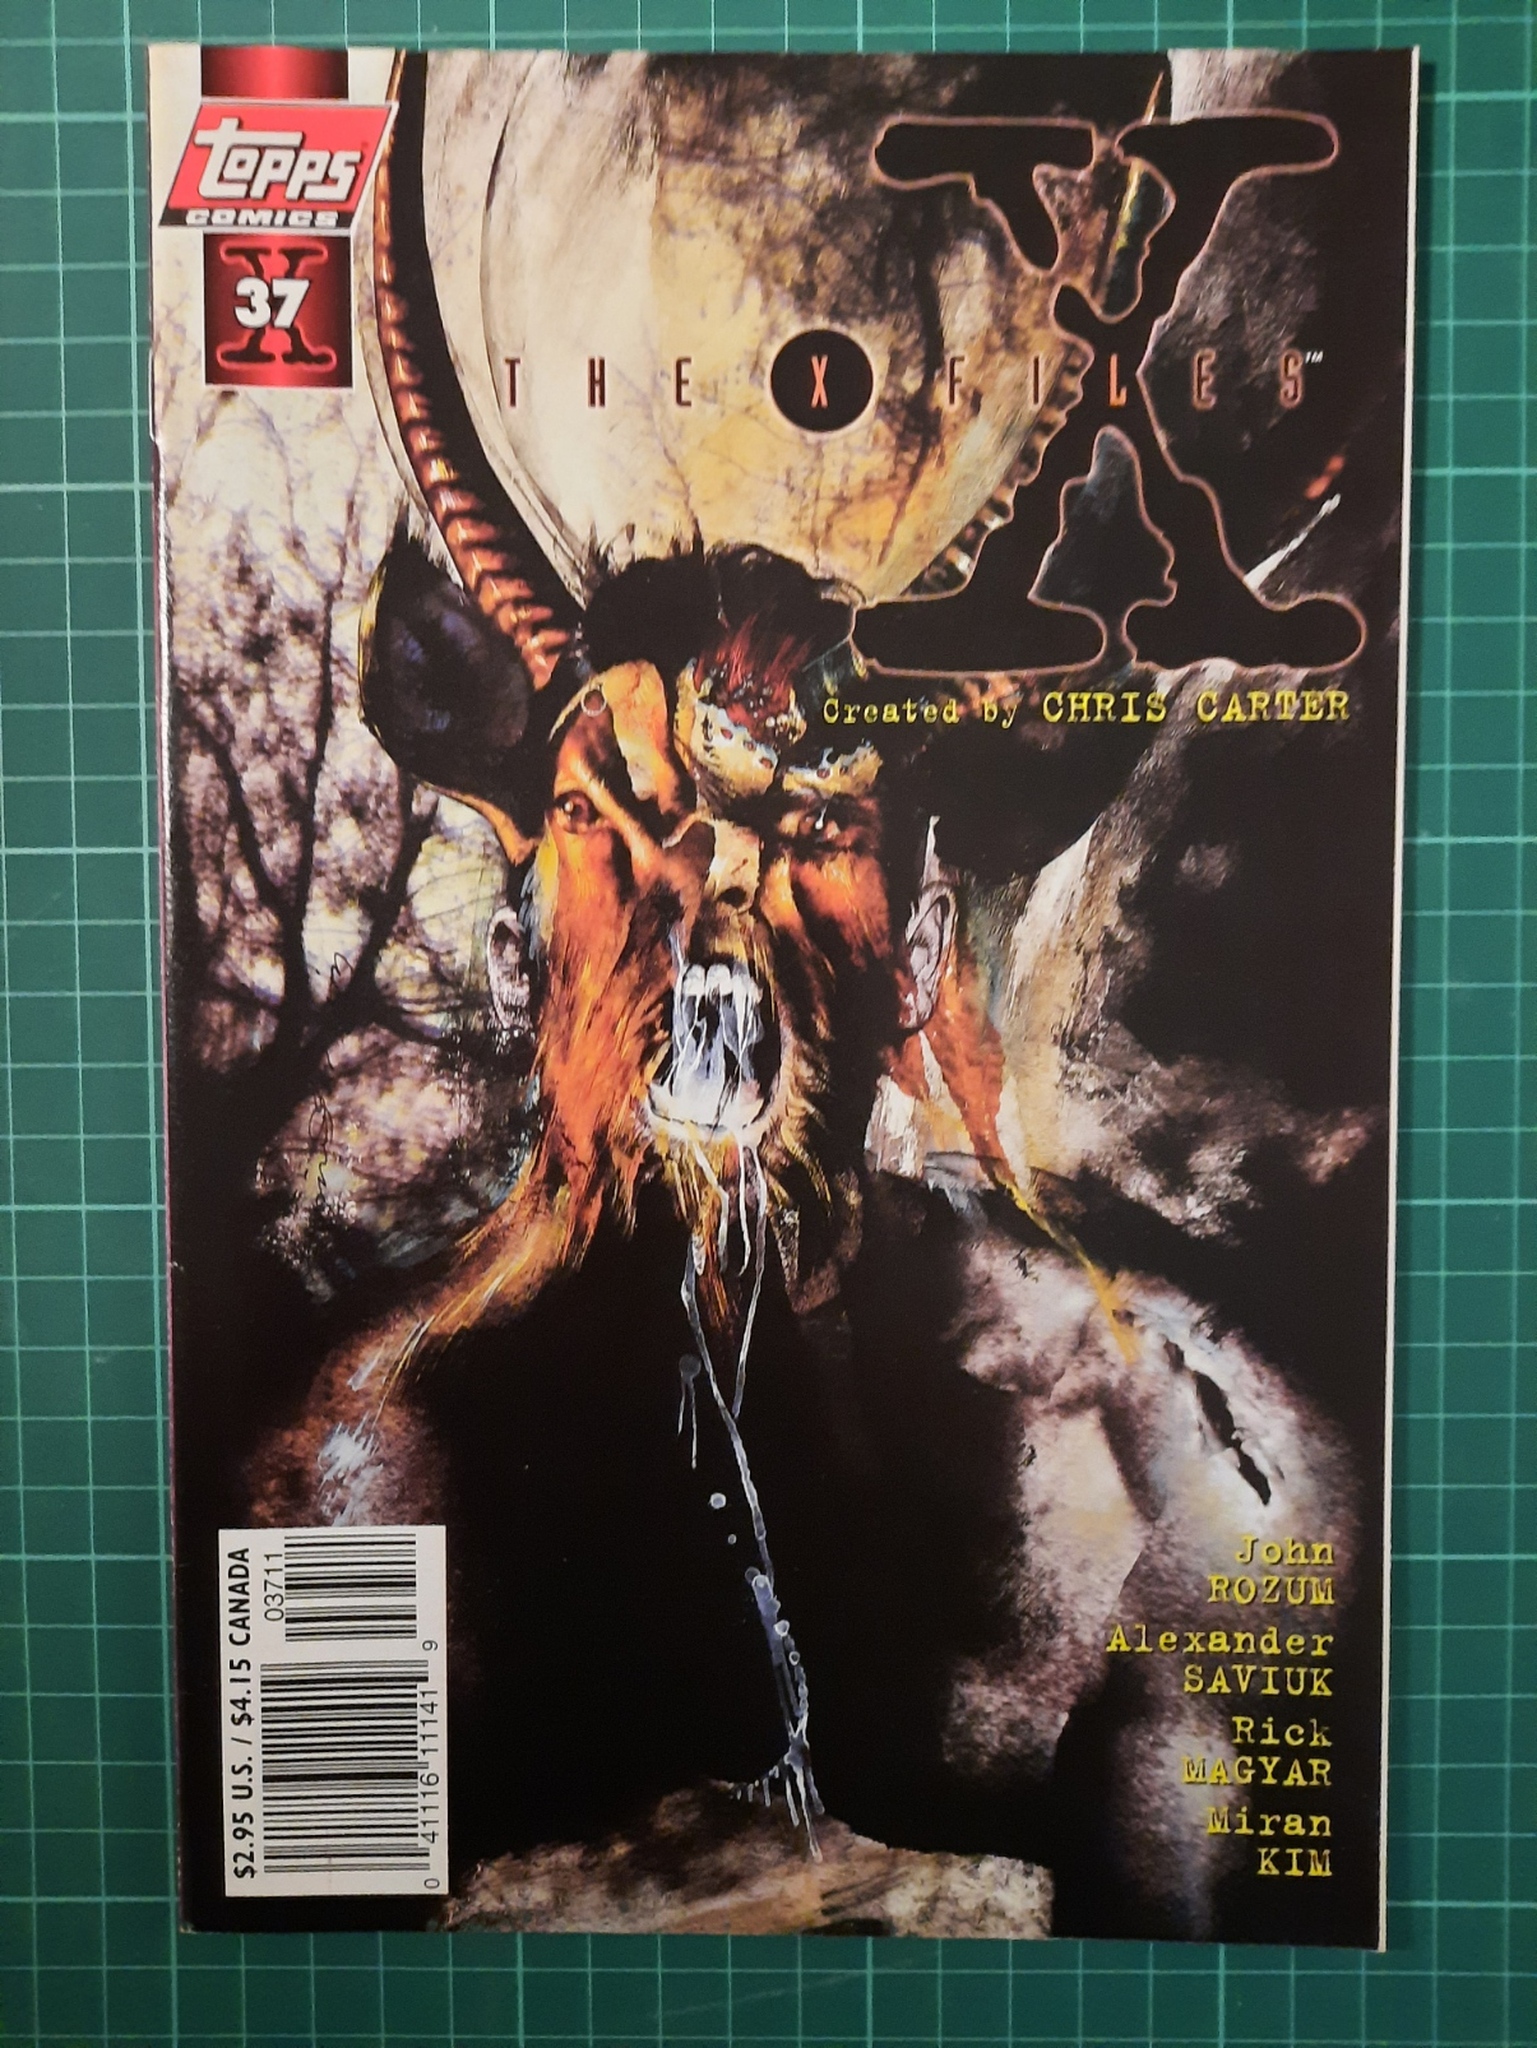 X-Files - vol 1 #37 (USA utgave)